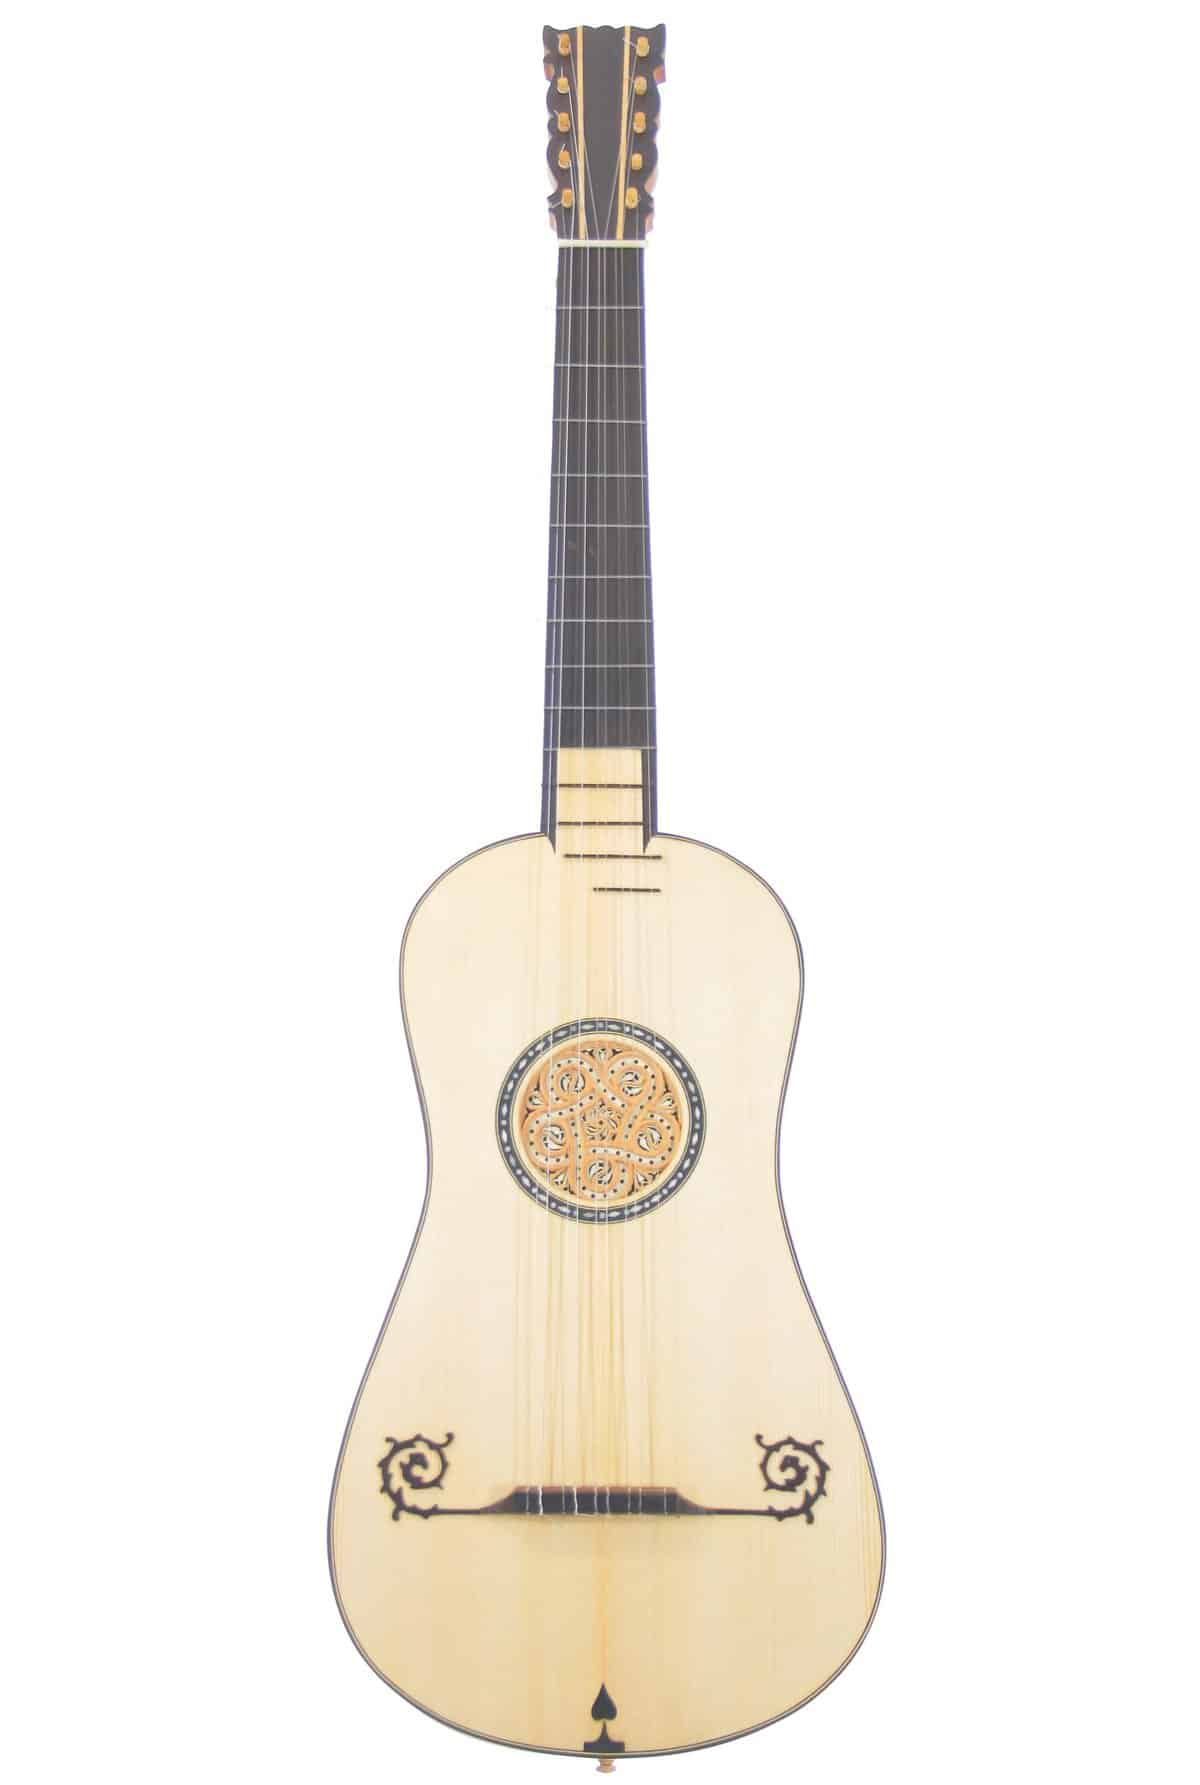 IMG 0261 - Antonio Stradivari 1679 baroque guitar 2022